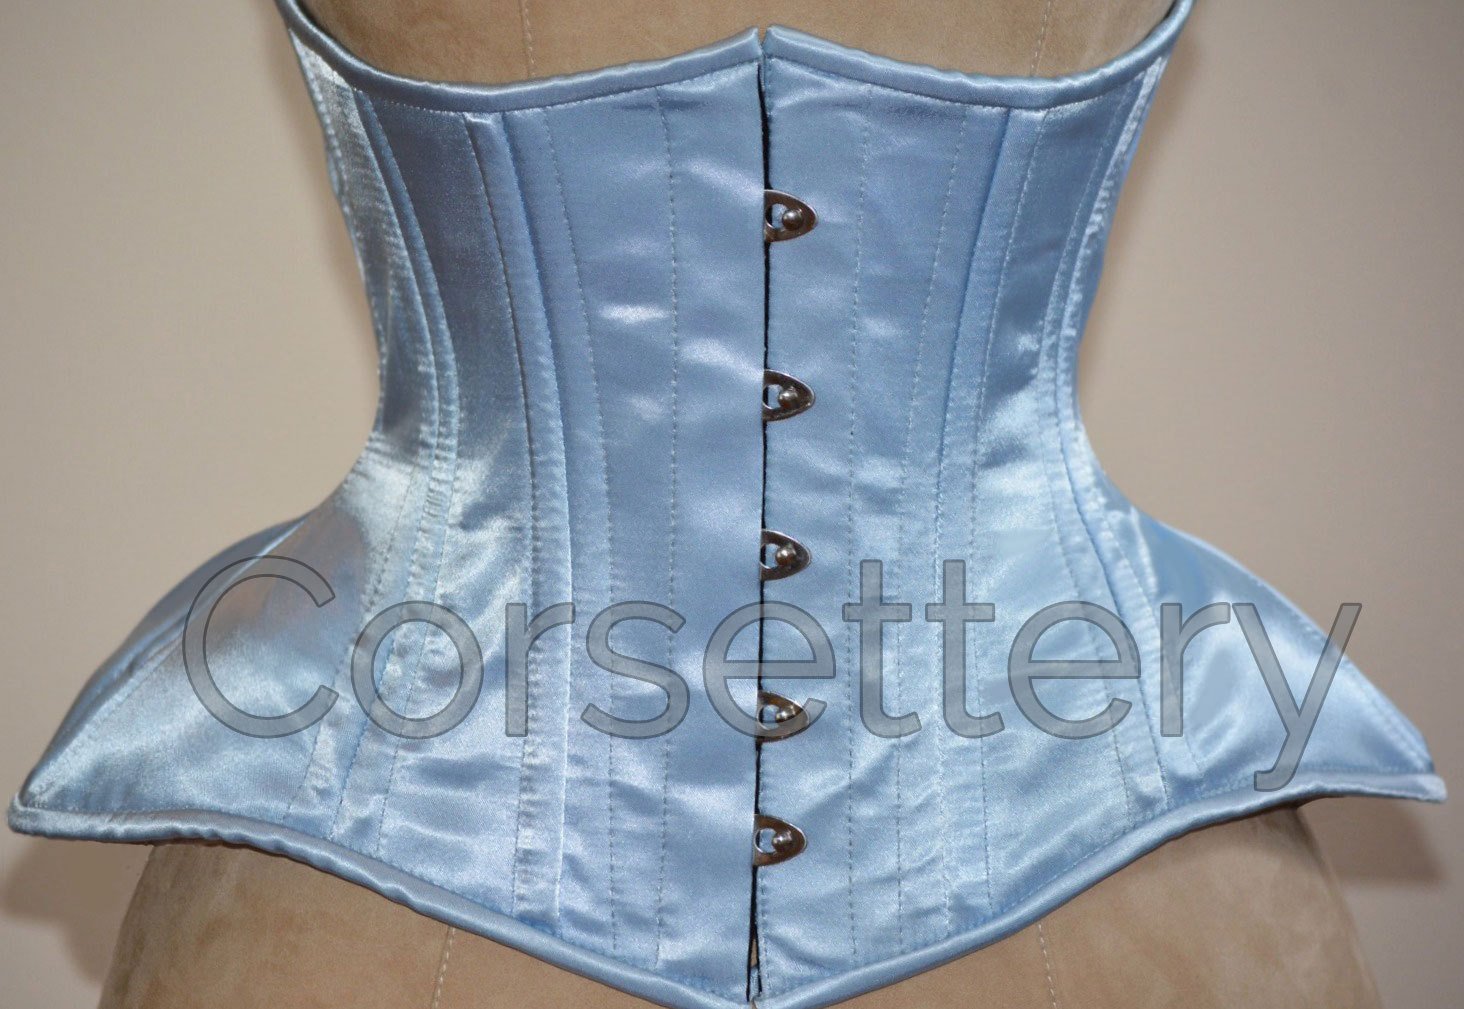 Very wide hips double row steel boned underbust corset from satin